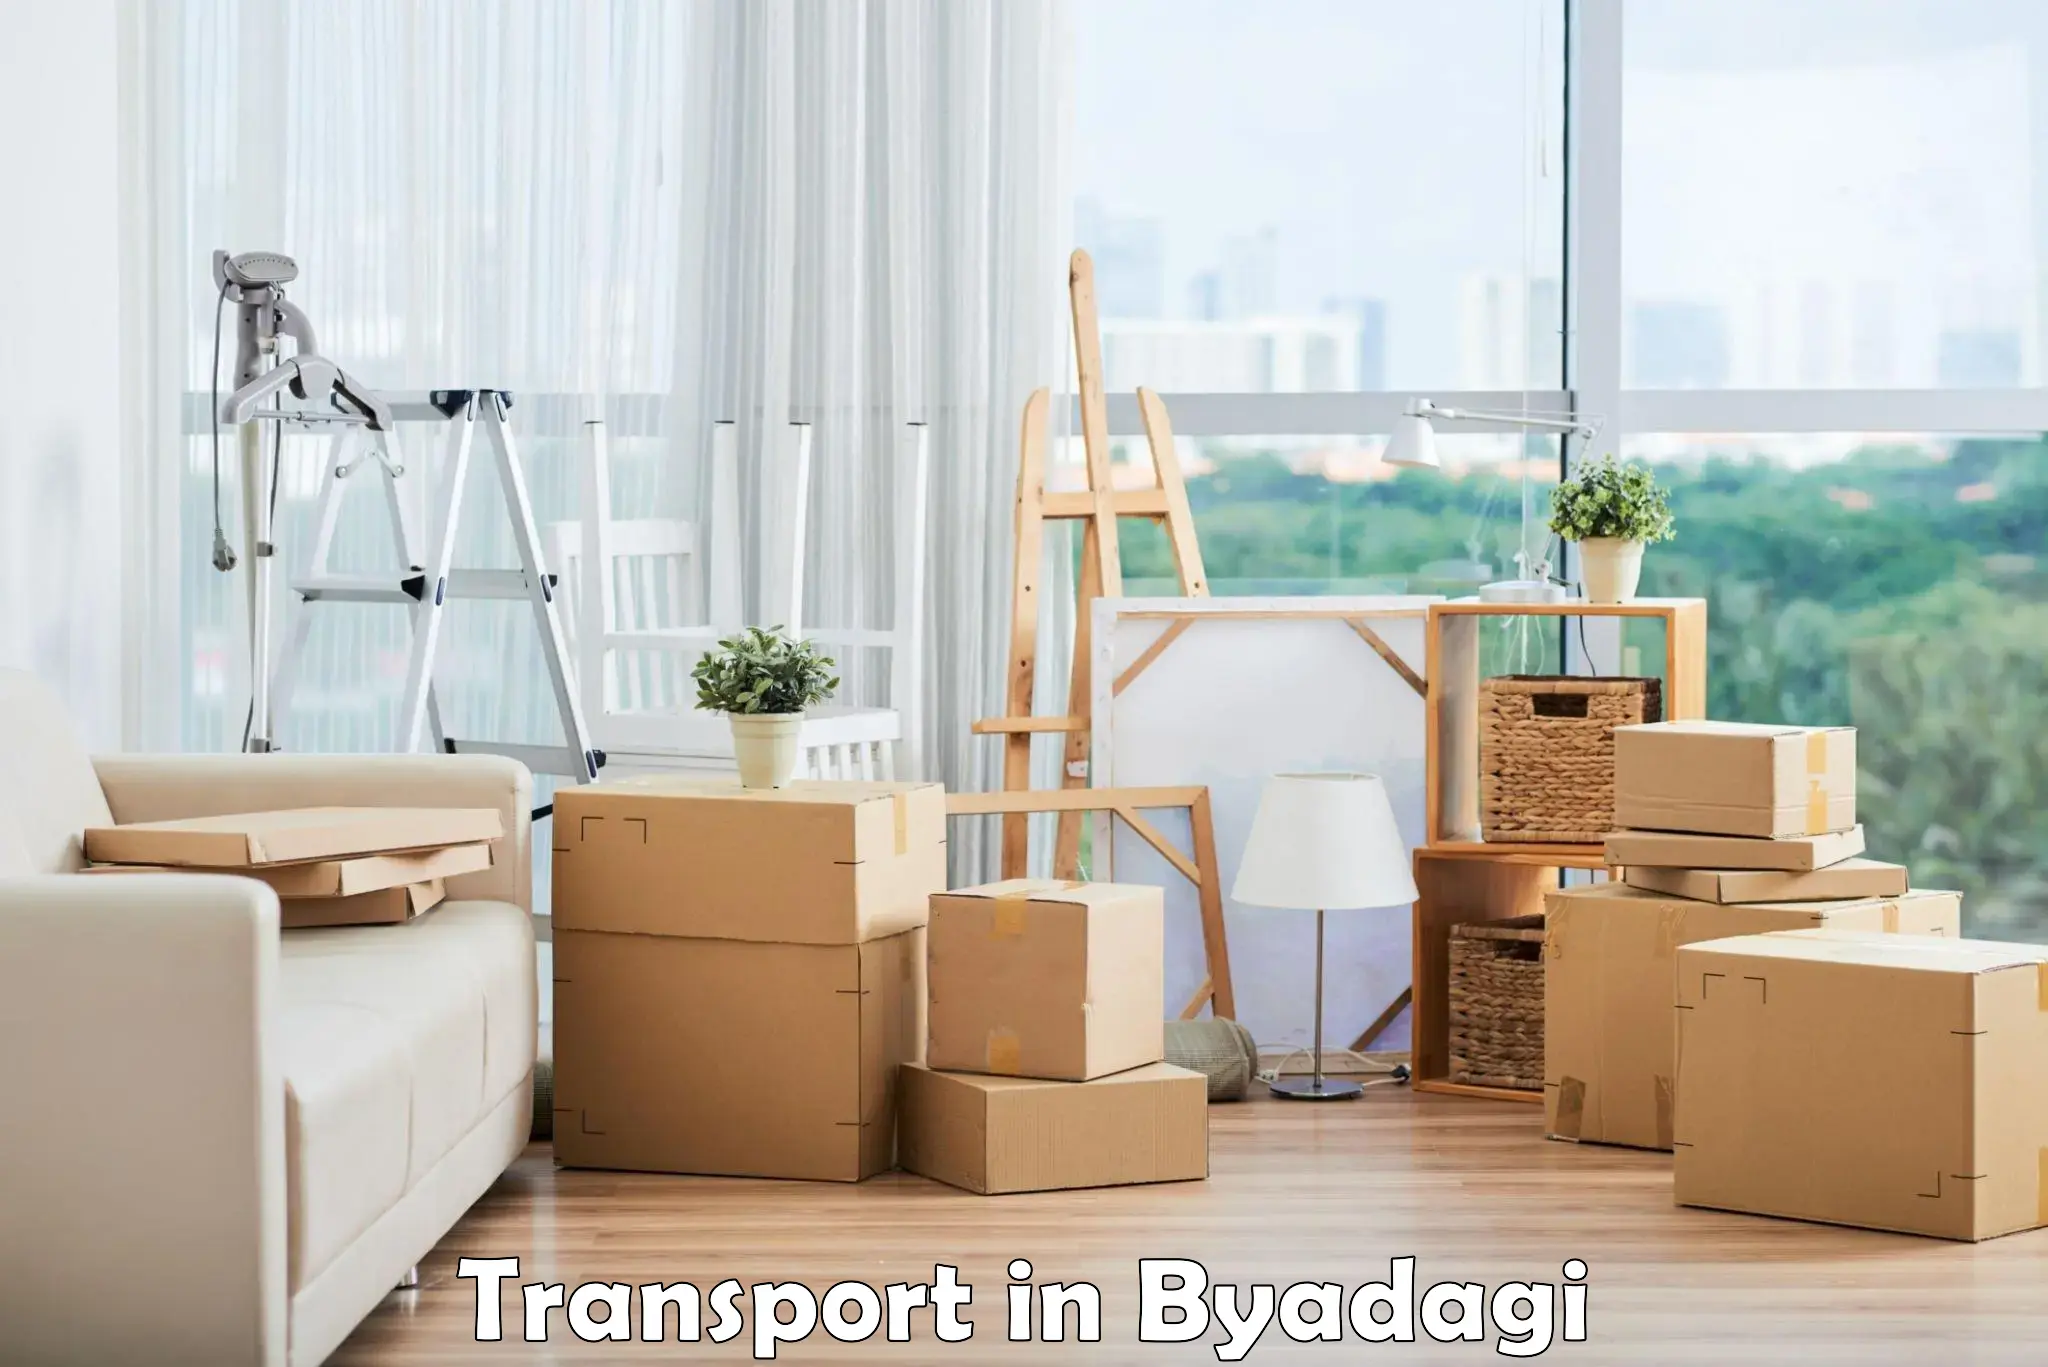 Road transport services in Byadagi